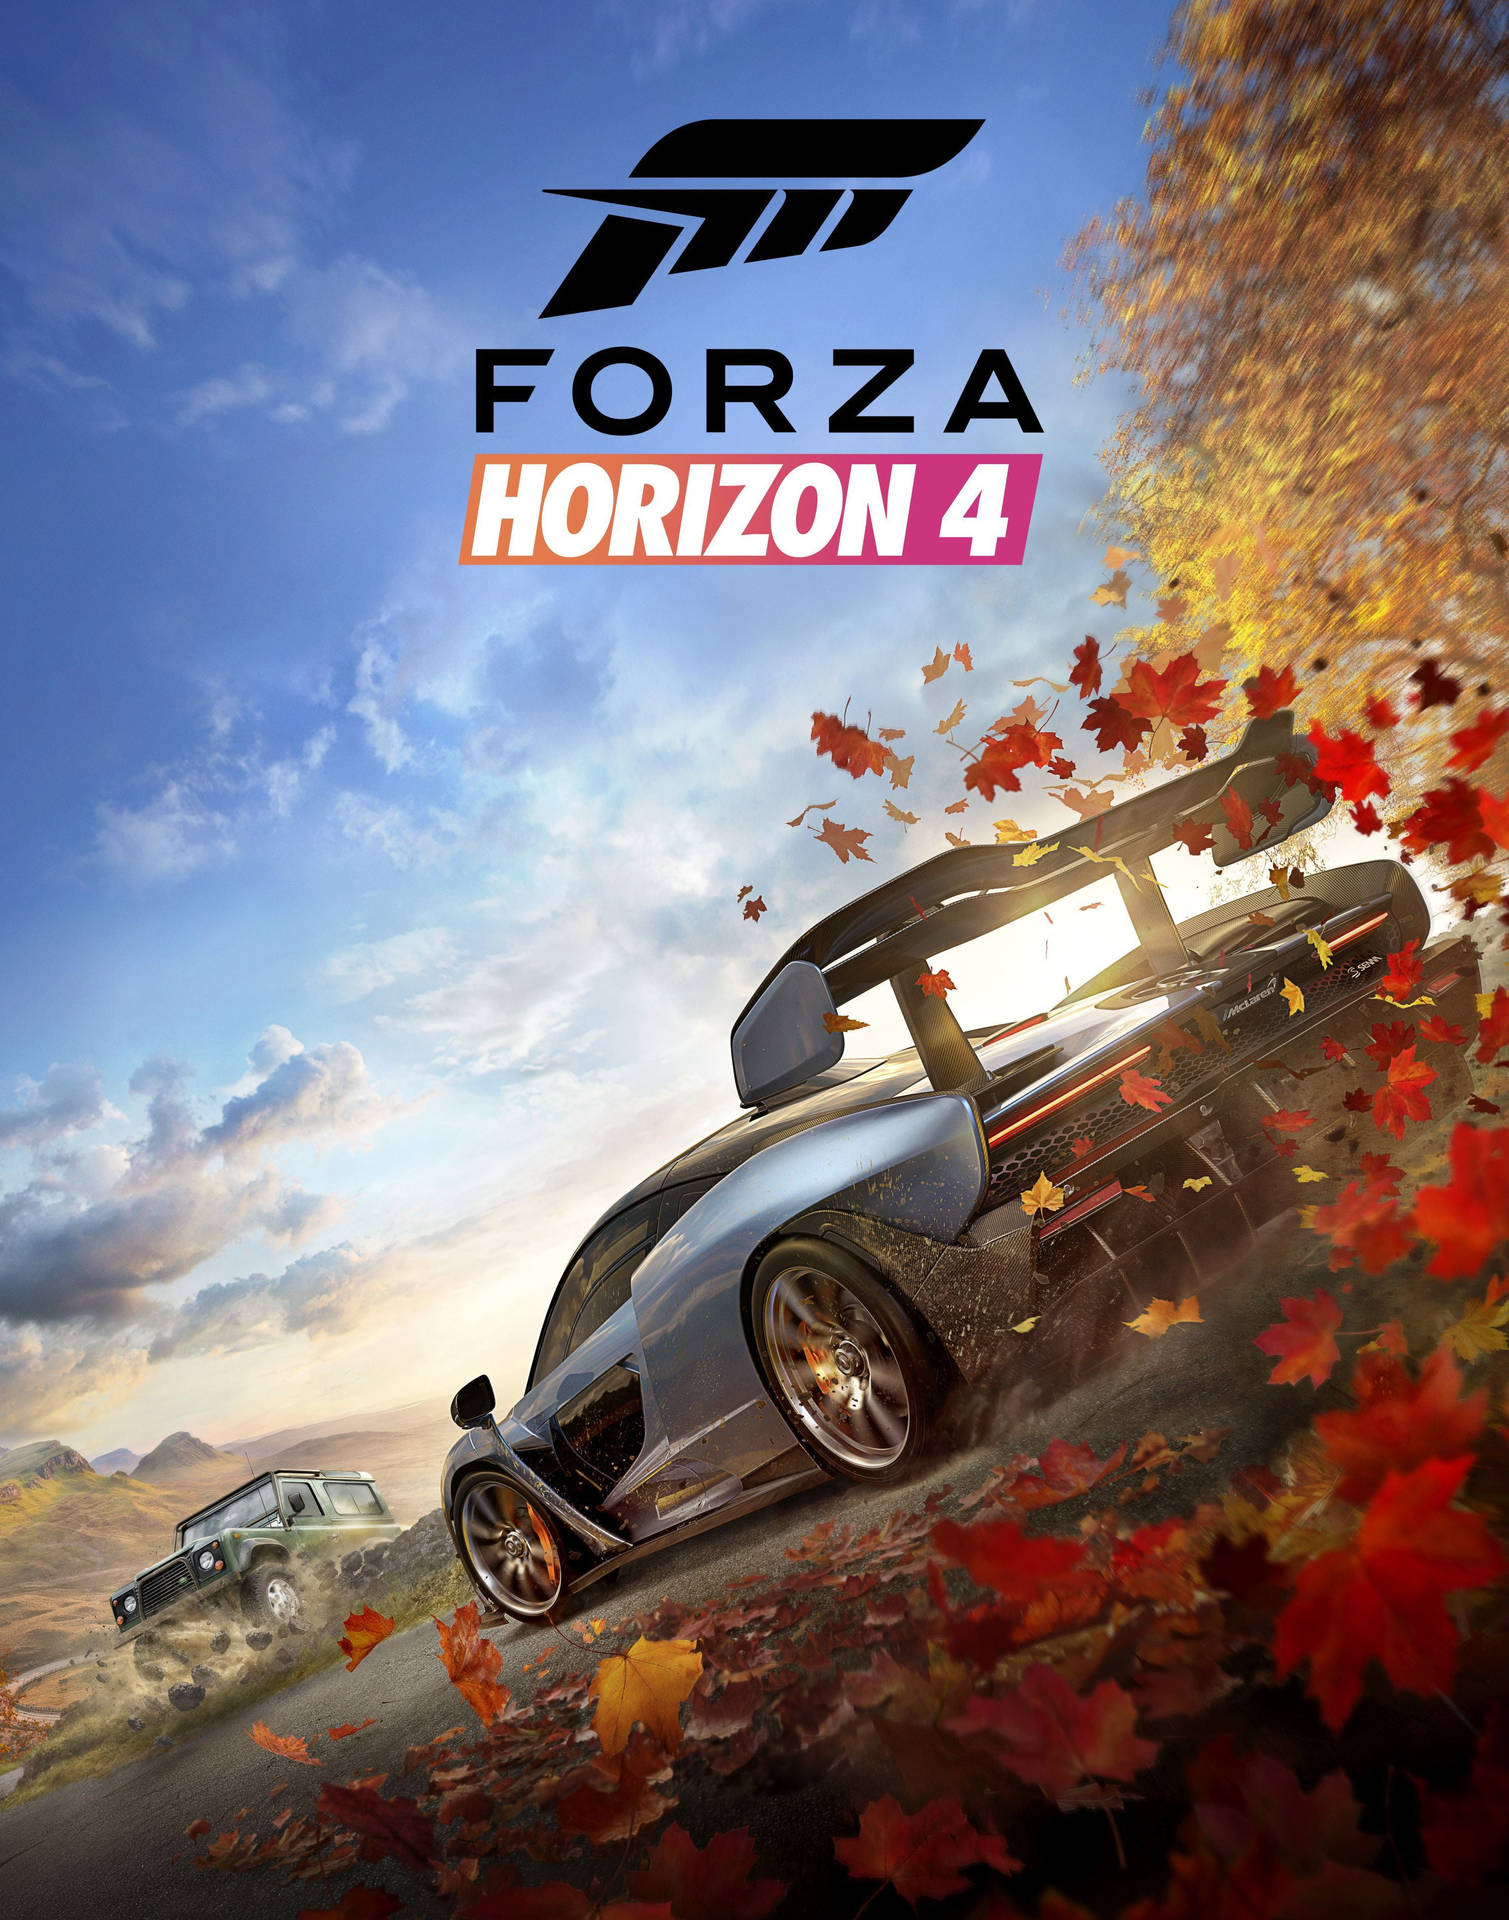 Top 999+ Forza Horizon 4 Wallpaper Full HD, 4K✅Free to Use